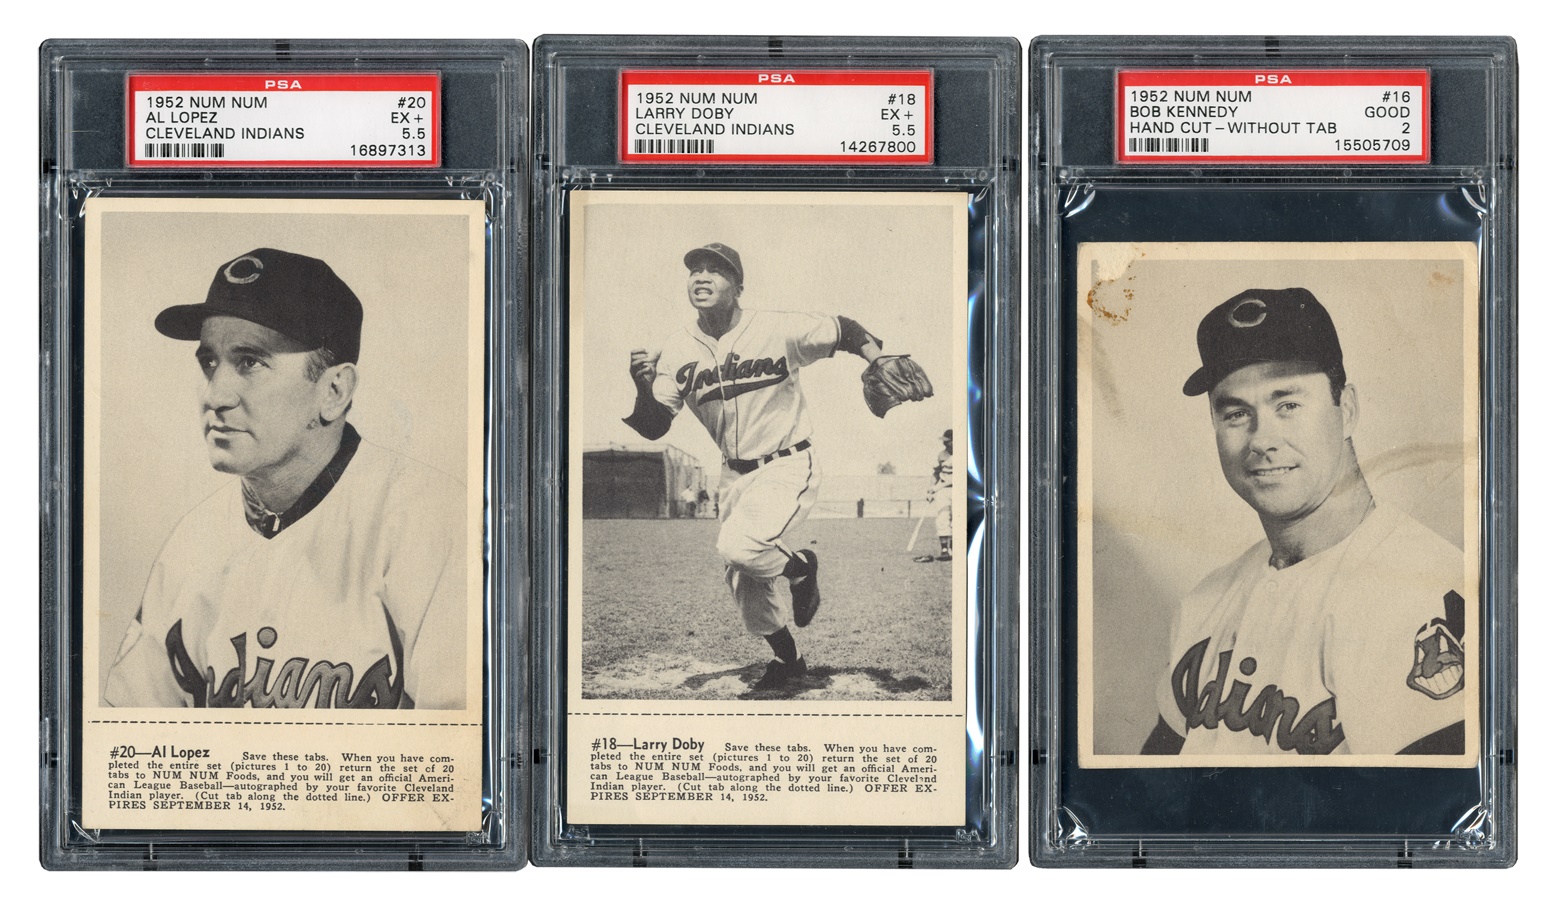 - 1952 Num Num Cleveland Indians Card Set (#5 on the PSA Set Registry)